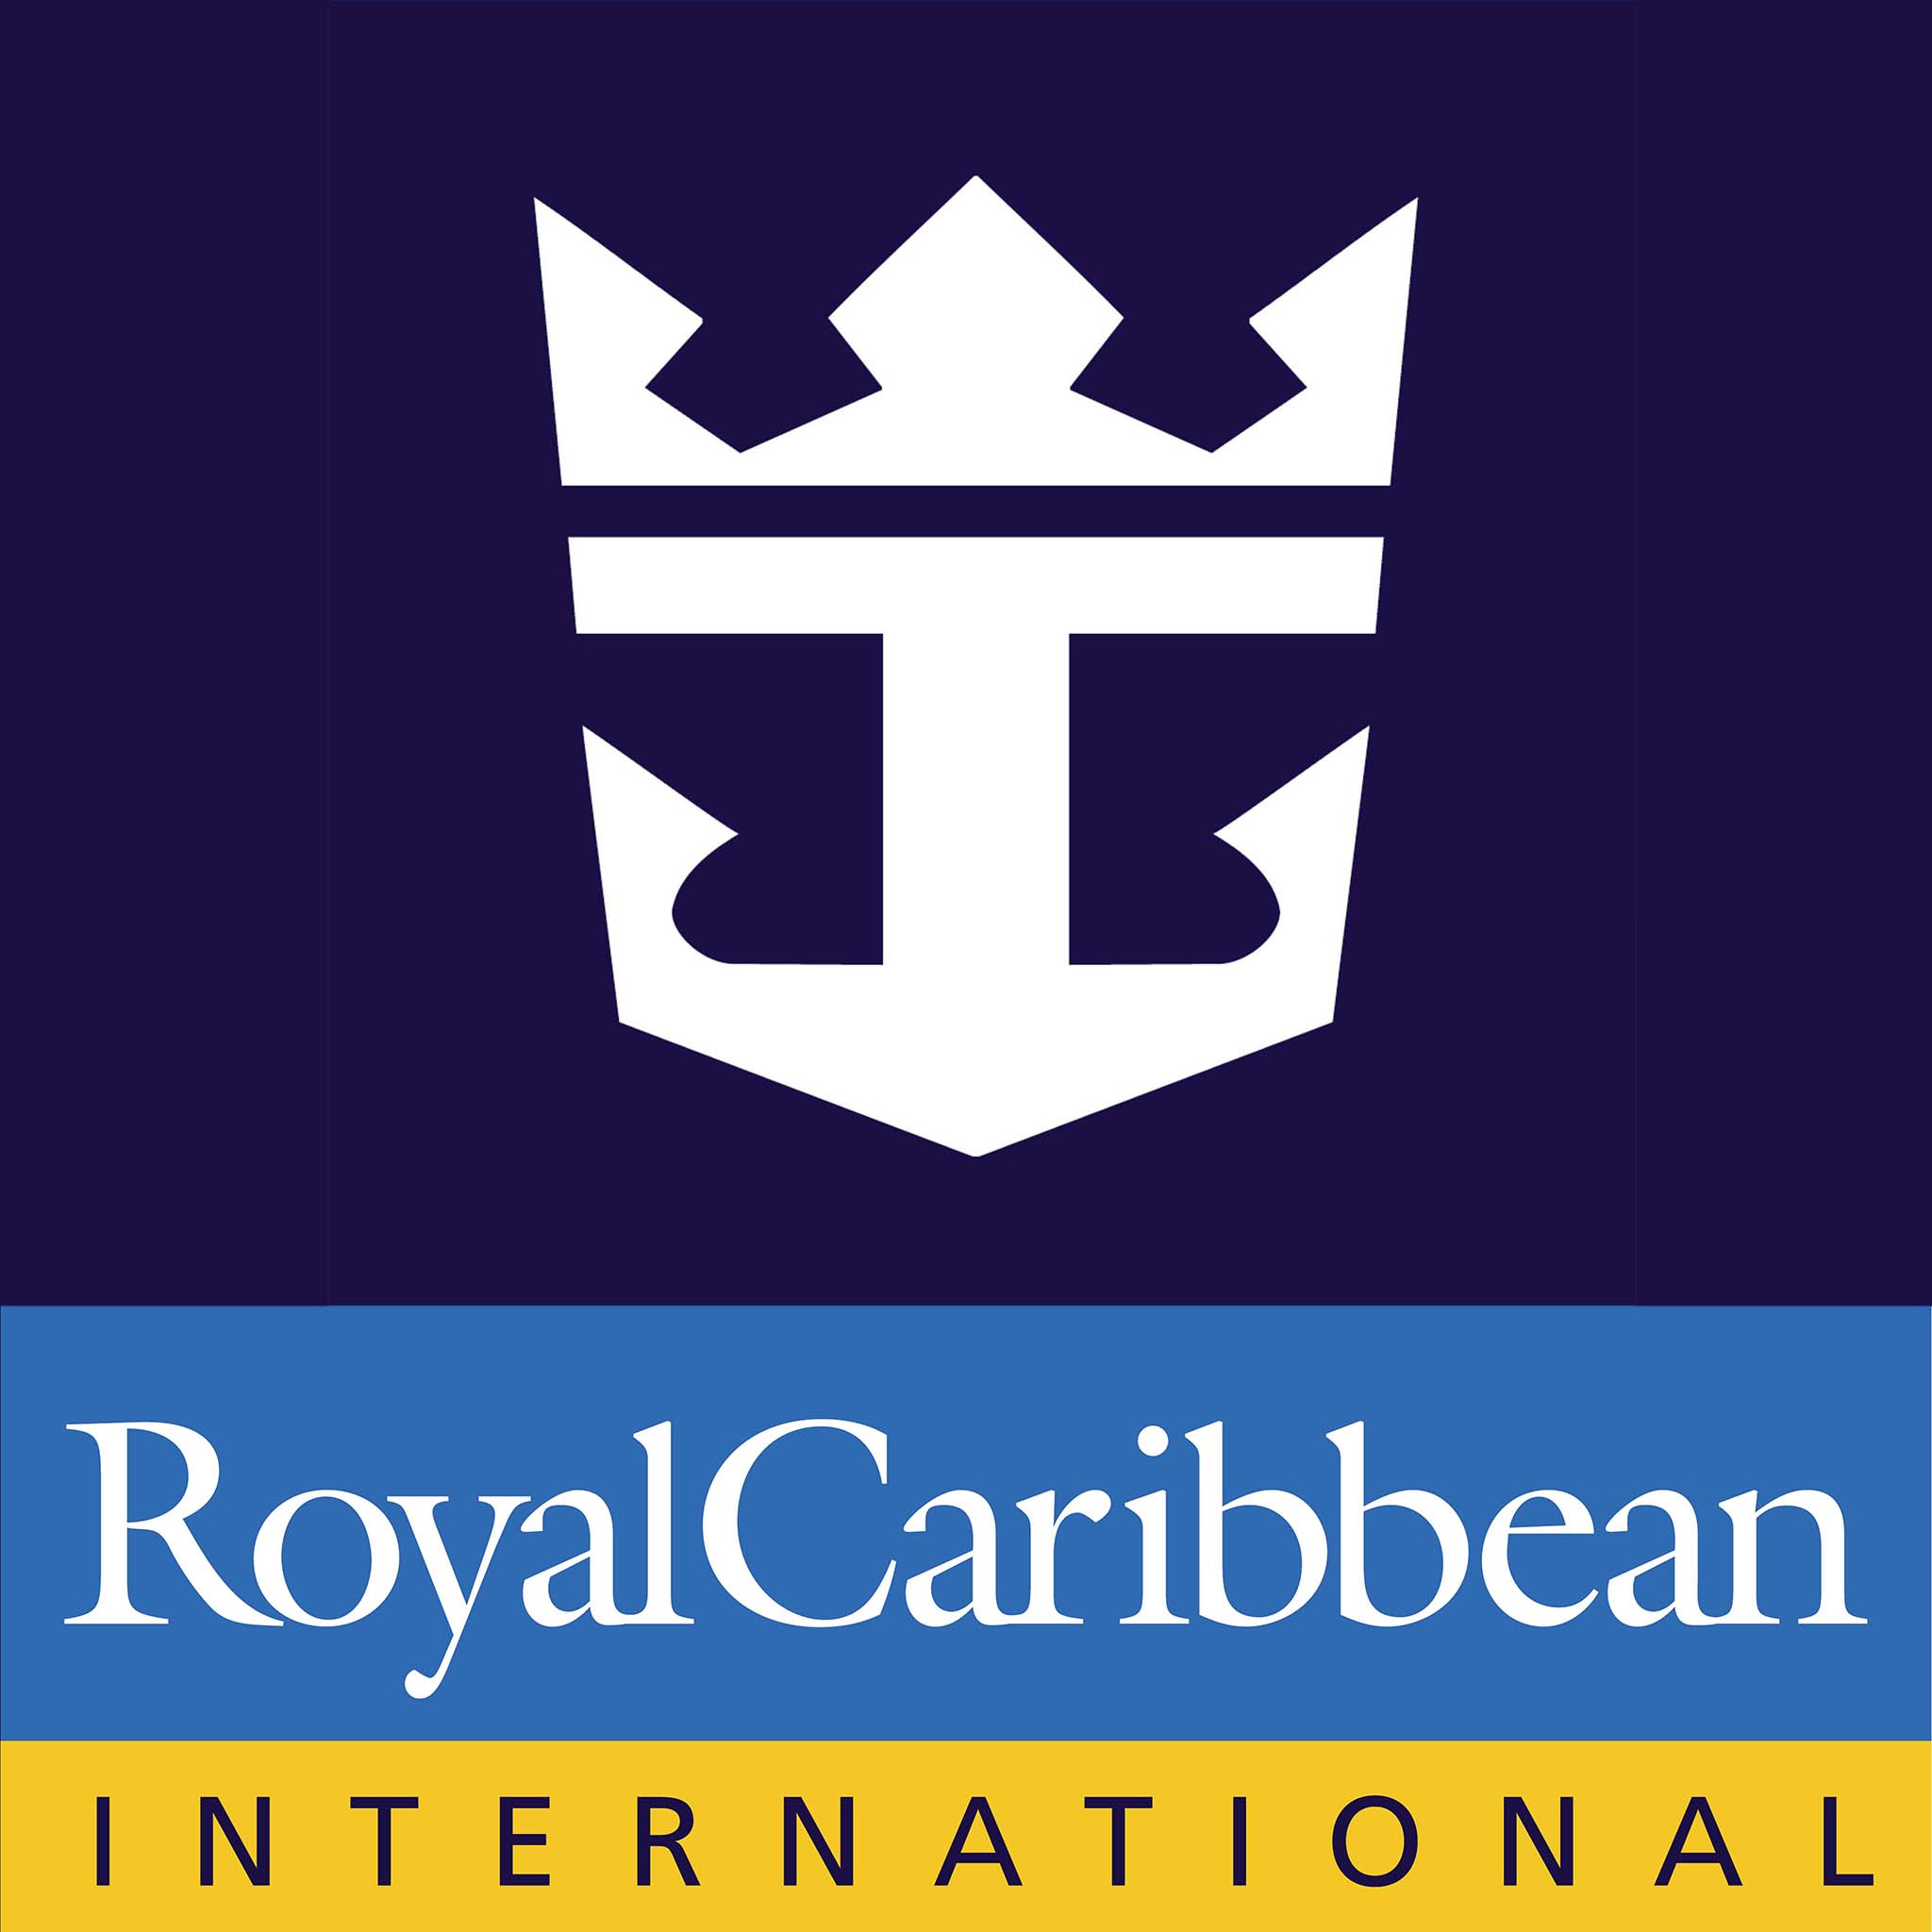 royal caribbean cruise parent company